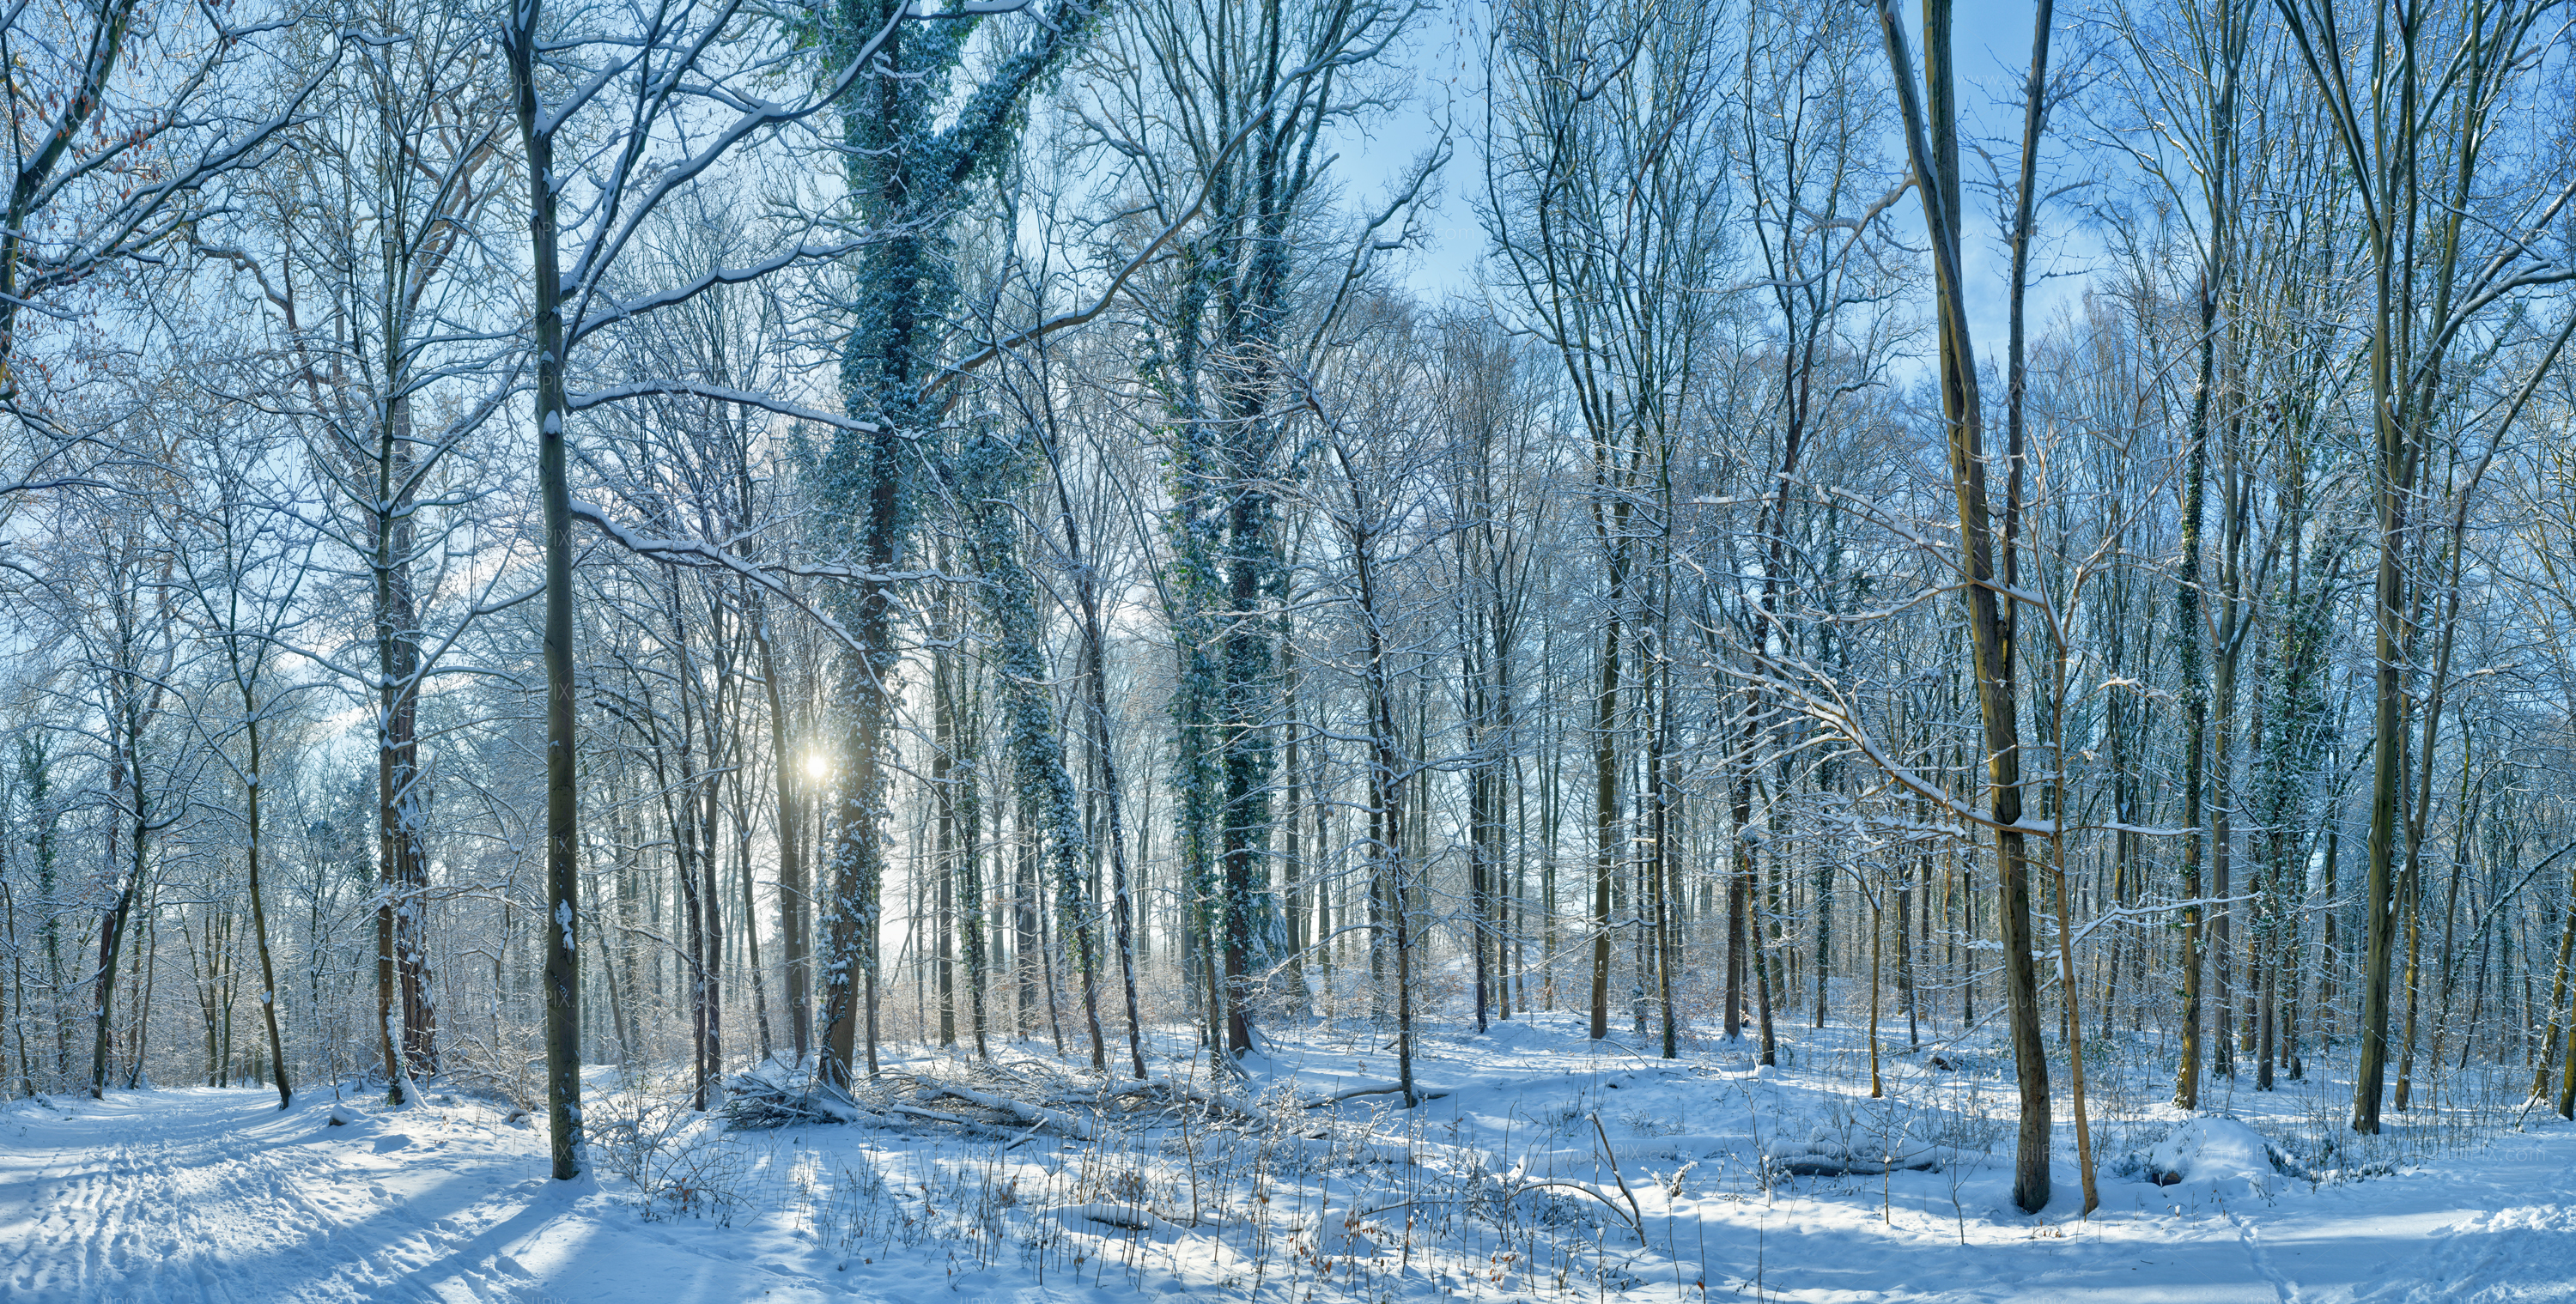 Preview Winterwald bei Koeln.jpg